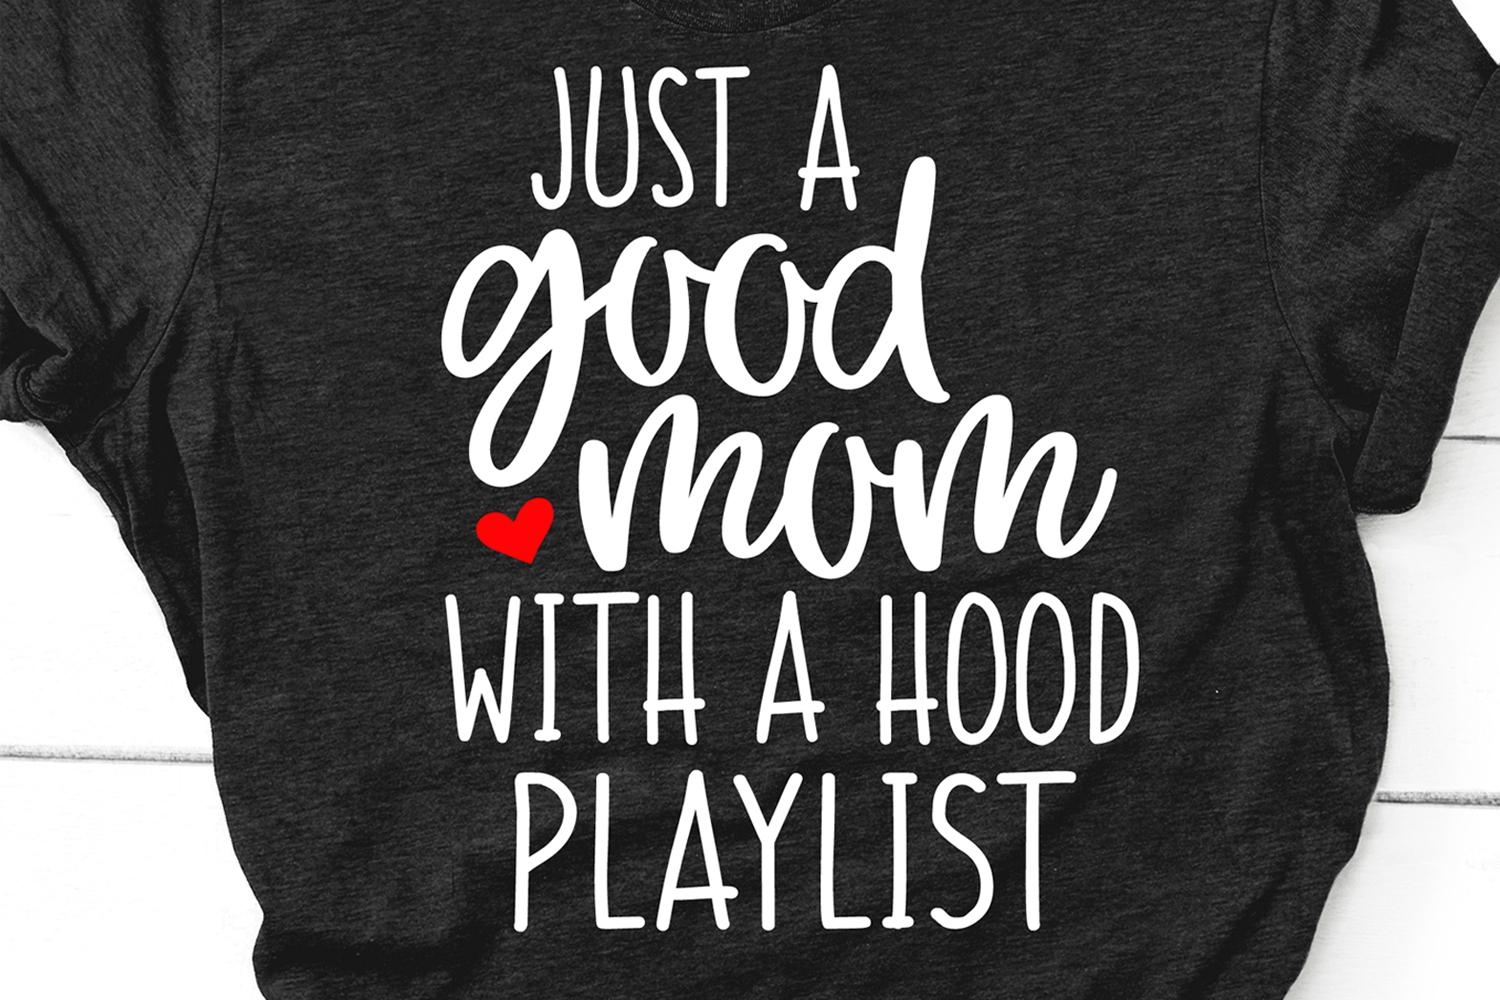 just a good mom with a hood playlist shirt